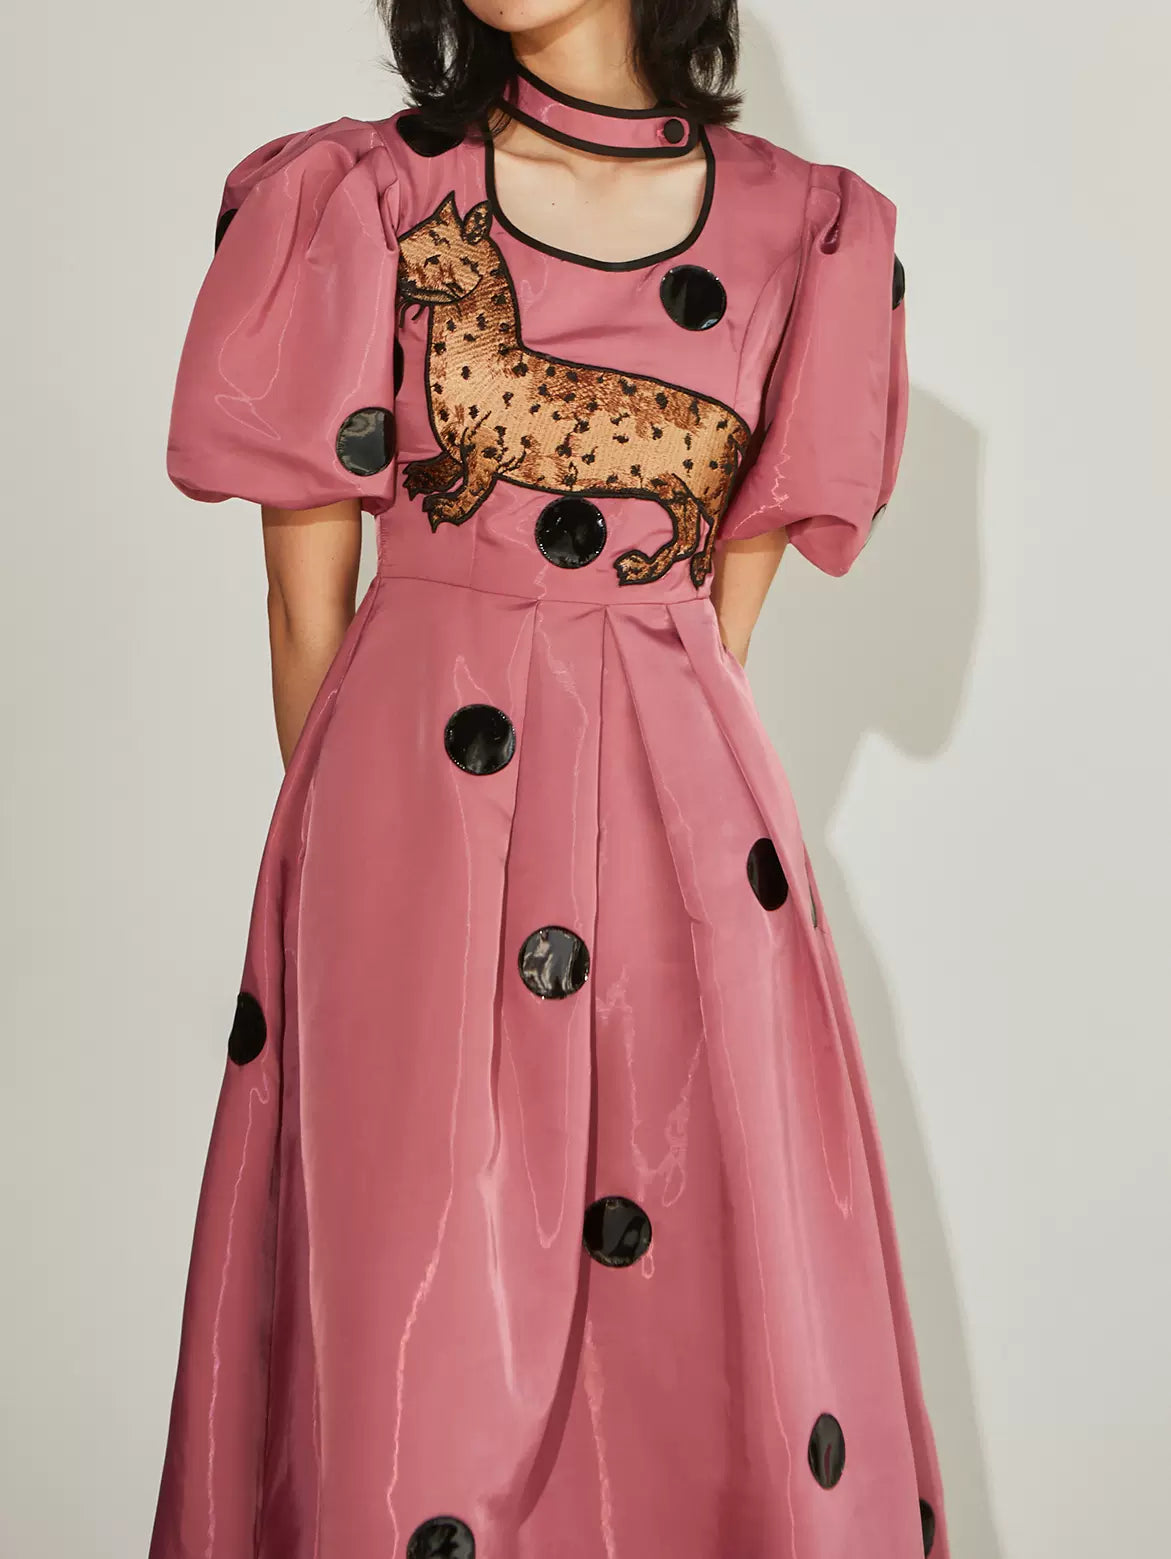 leopard cat embroidered polka dot short-sleeved dress